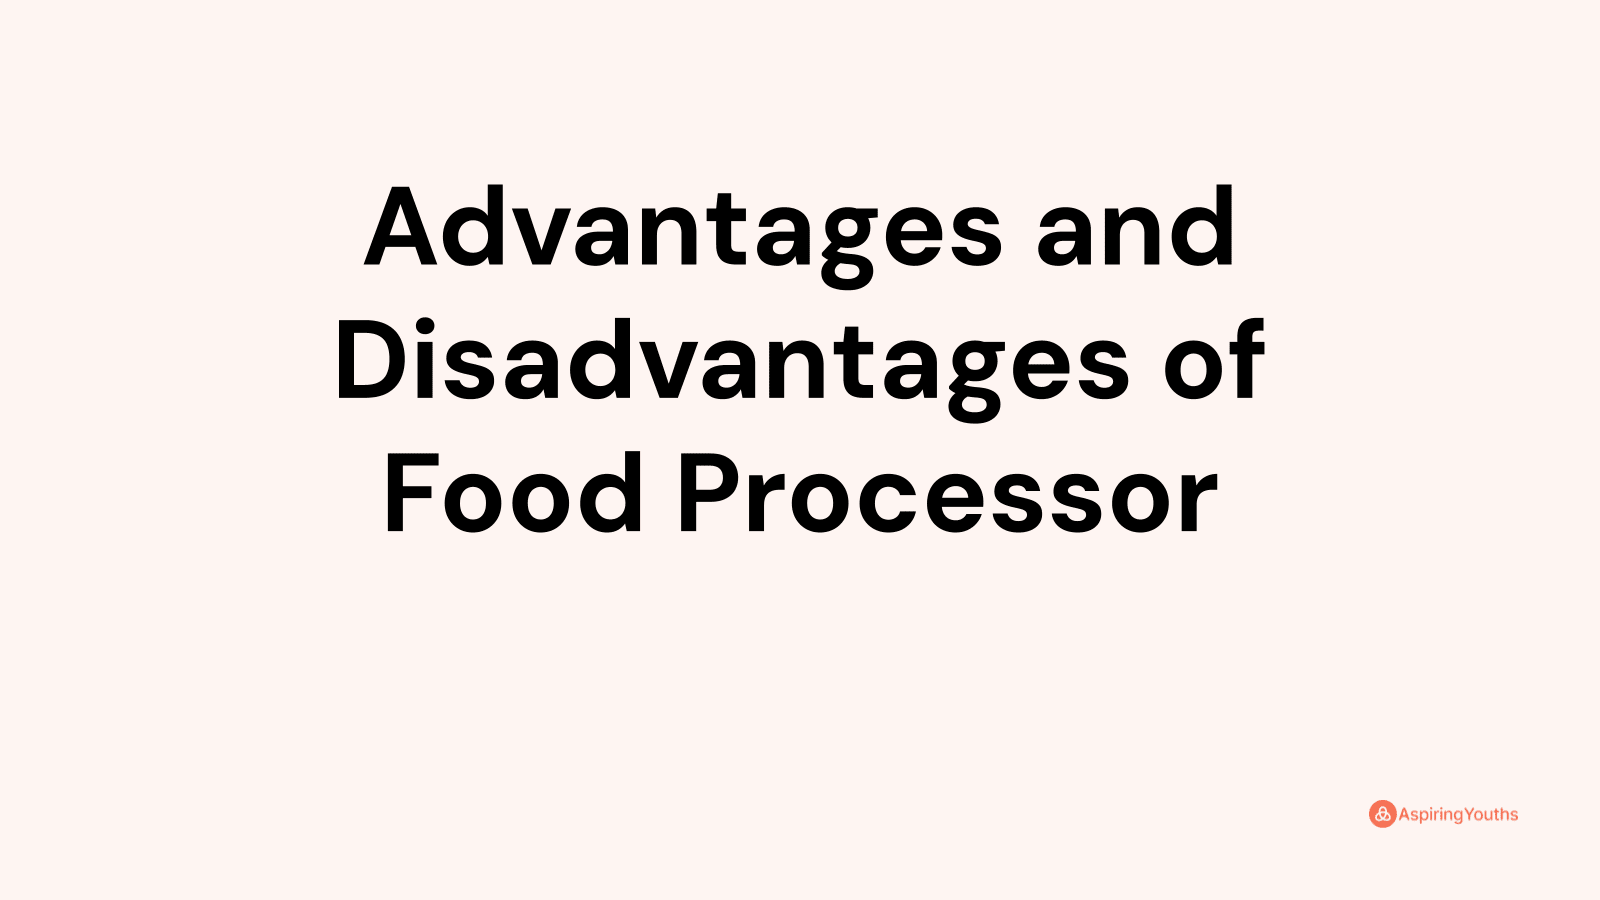 Advantages and disadvantages of Food Processor